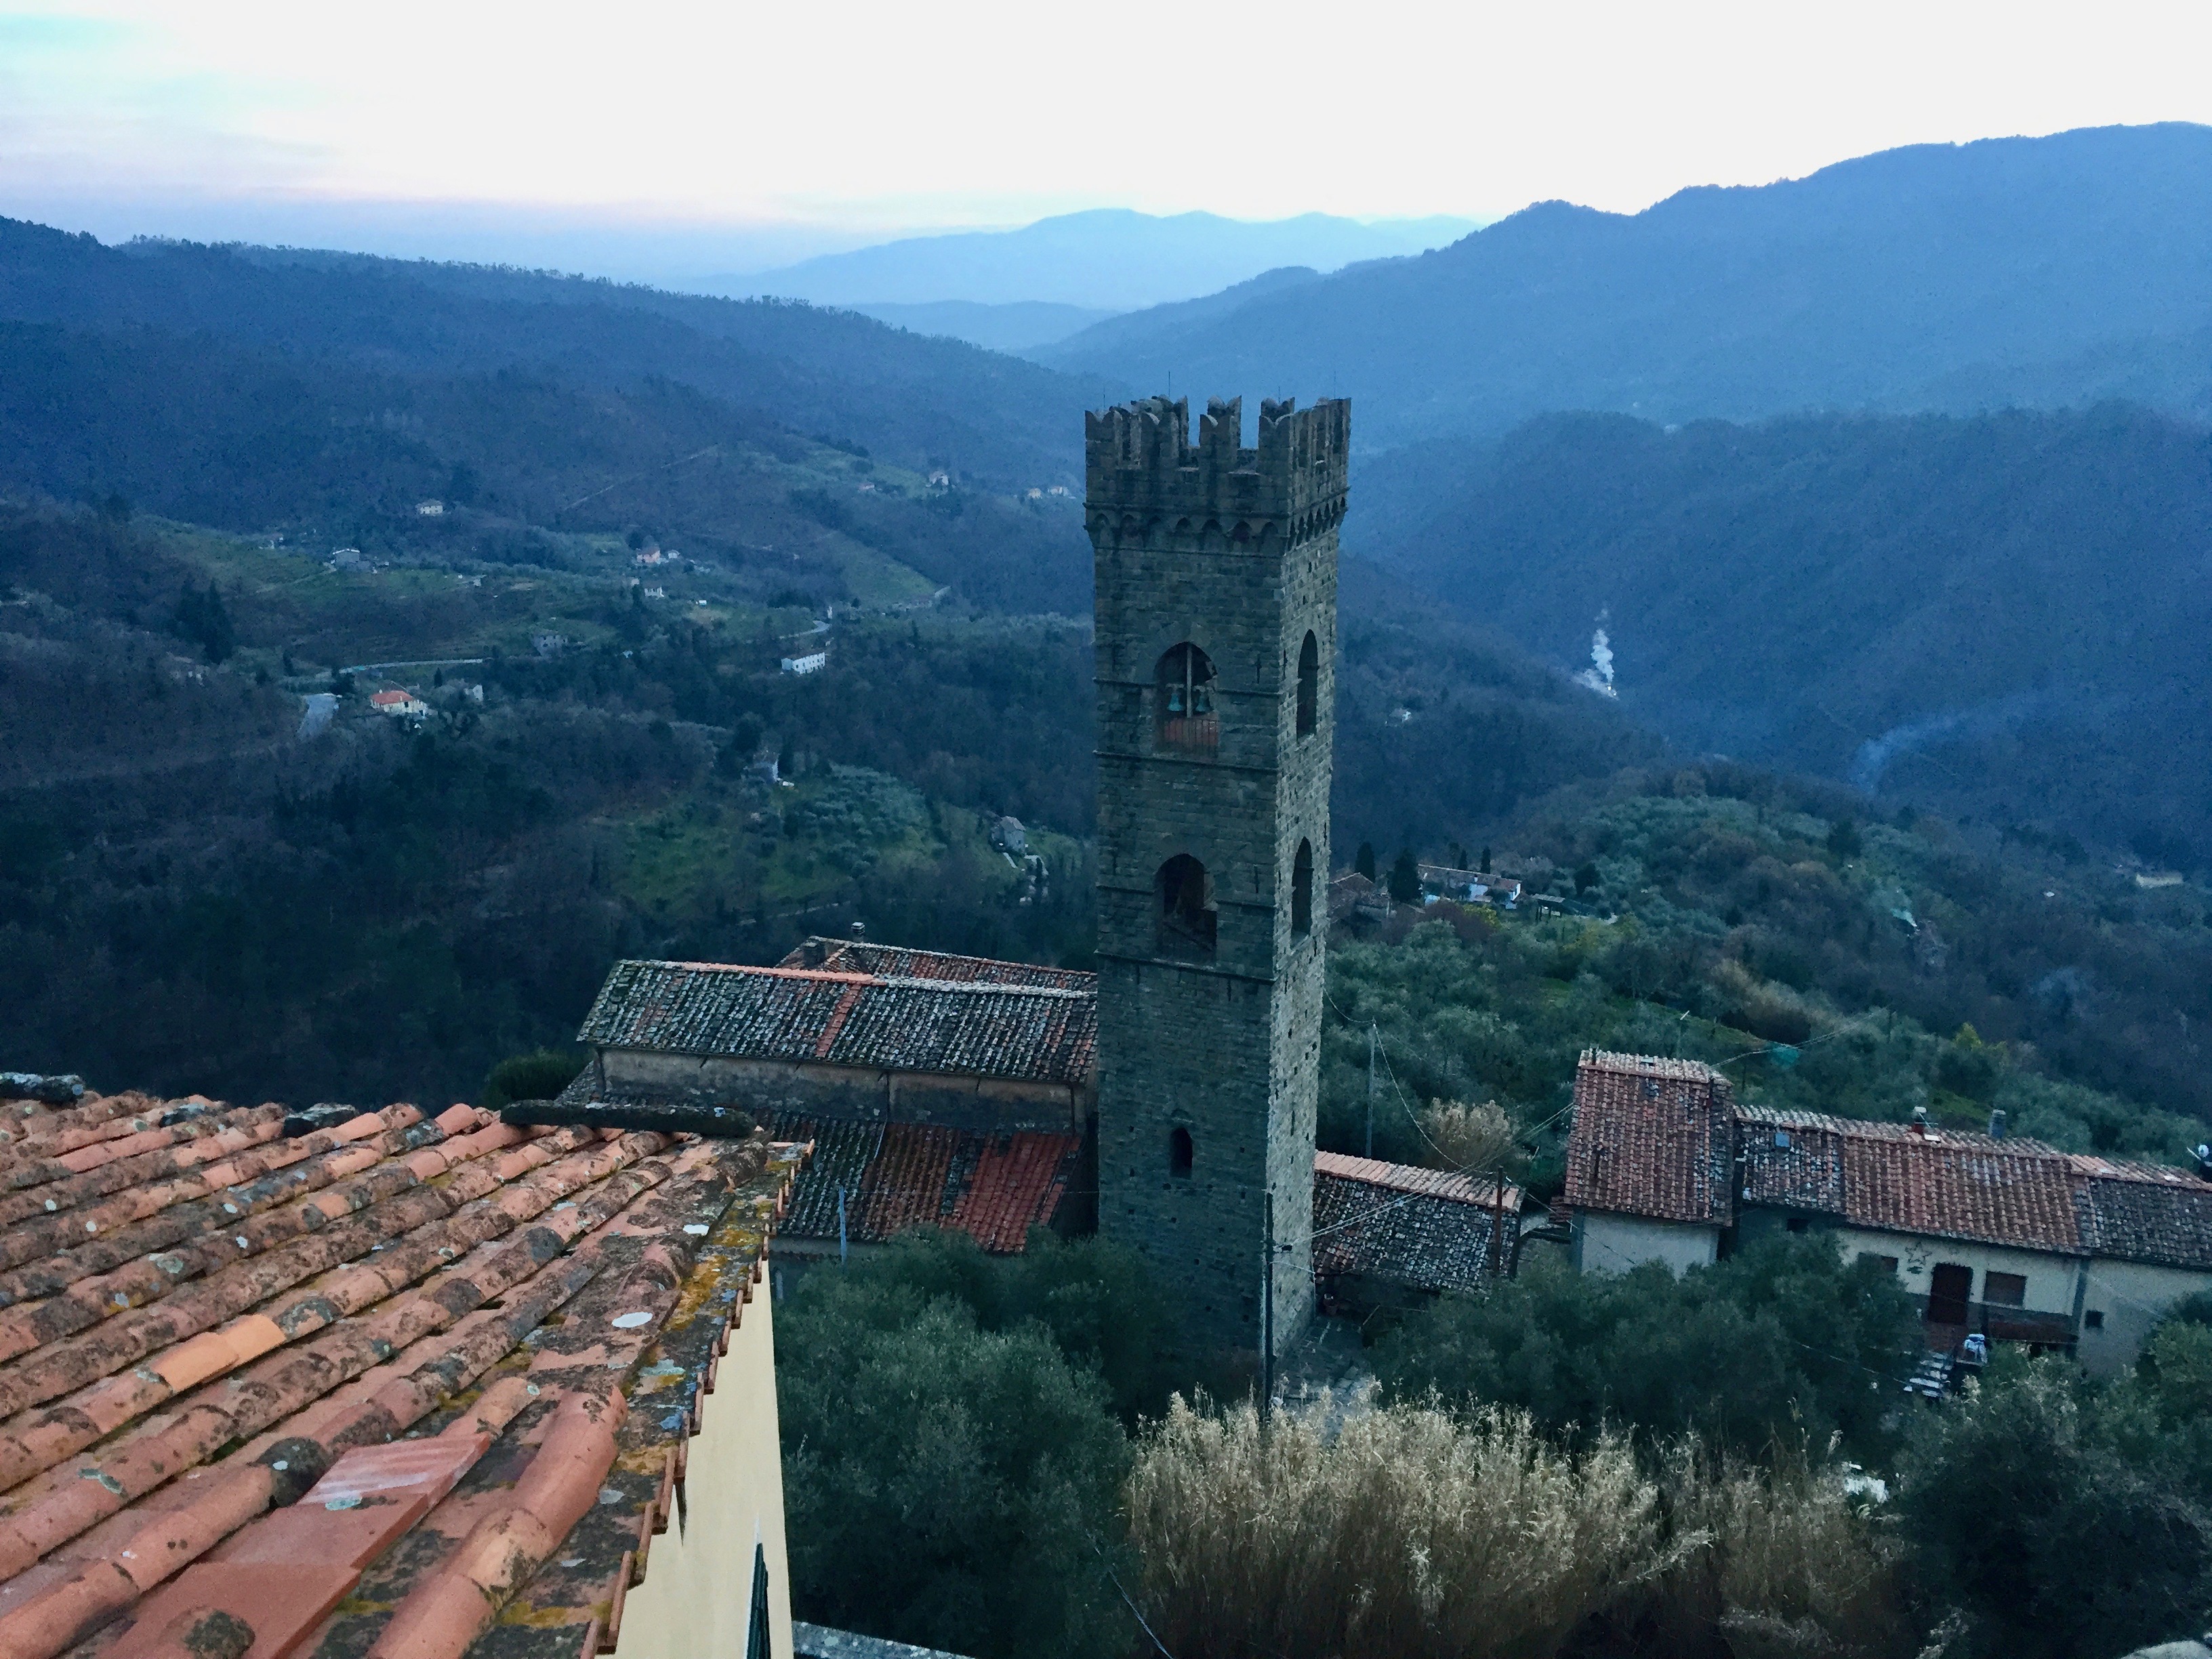 Tuscany off the beaten path